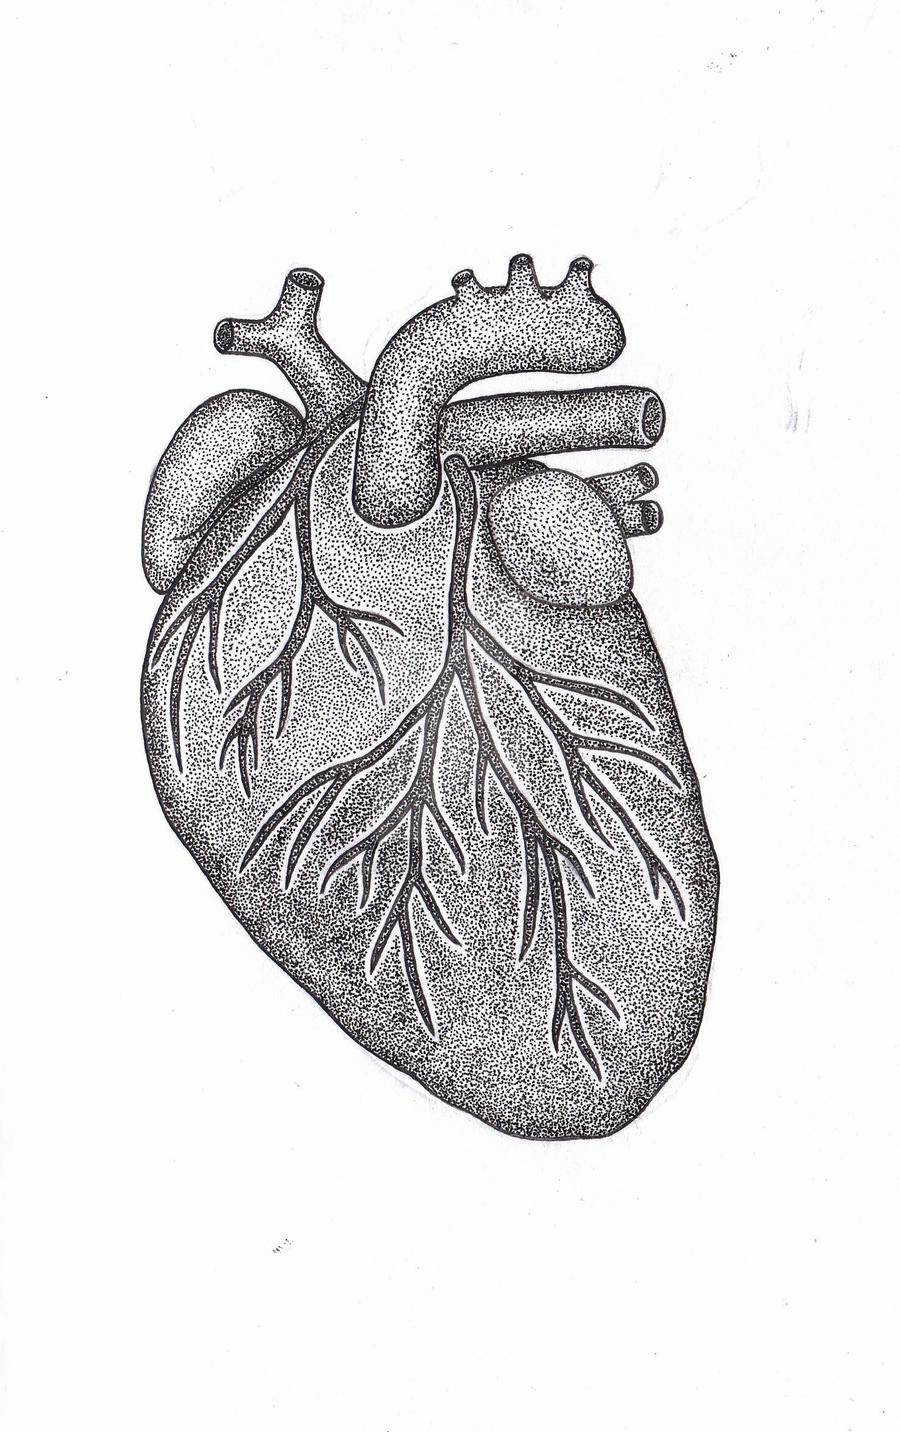 Heart Stippling Pen and Ink by JesseAllshouse on DeviantArt